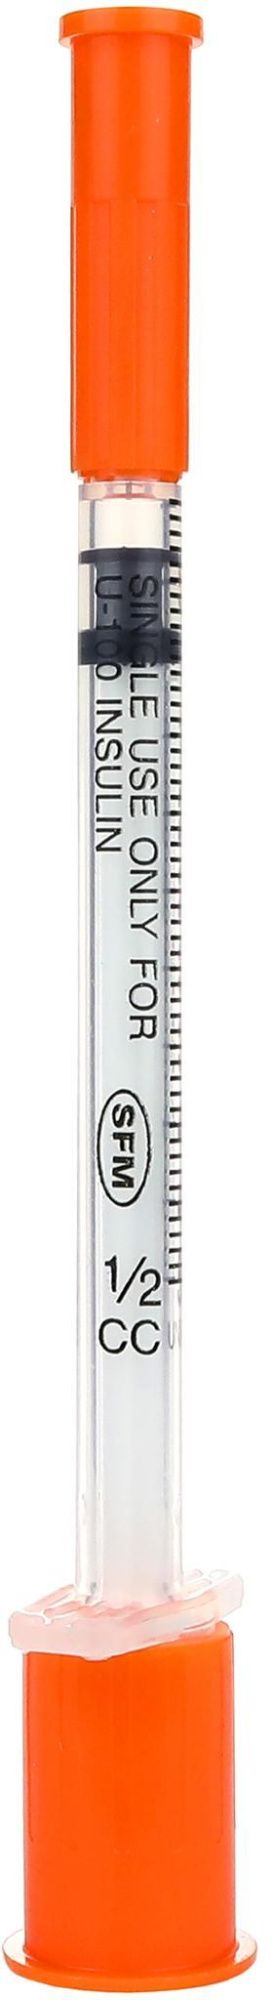 Шприц инсулиновый SFM U-100 - 0,5 мл (шаг 0,5 ед, игла 8 мм) №10